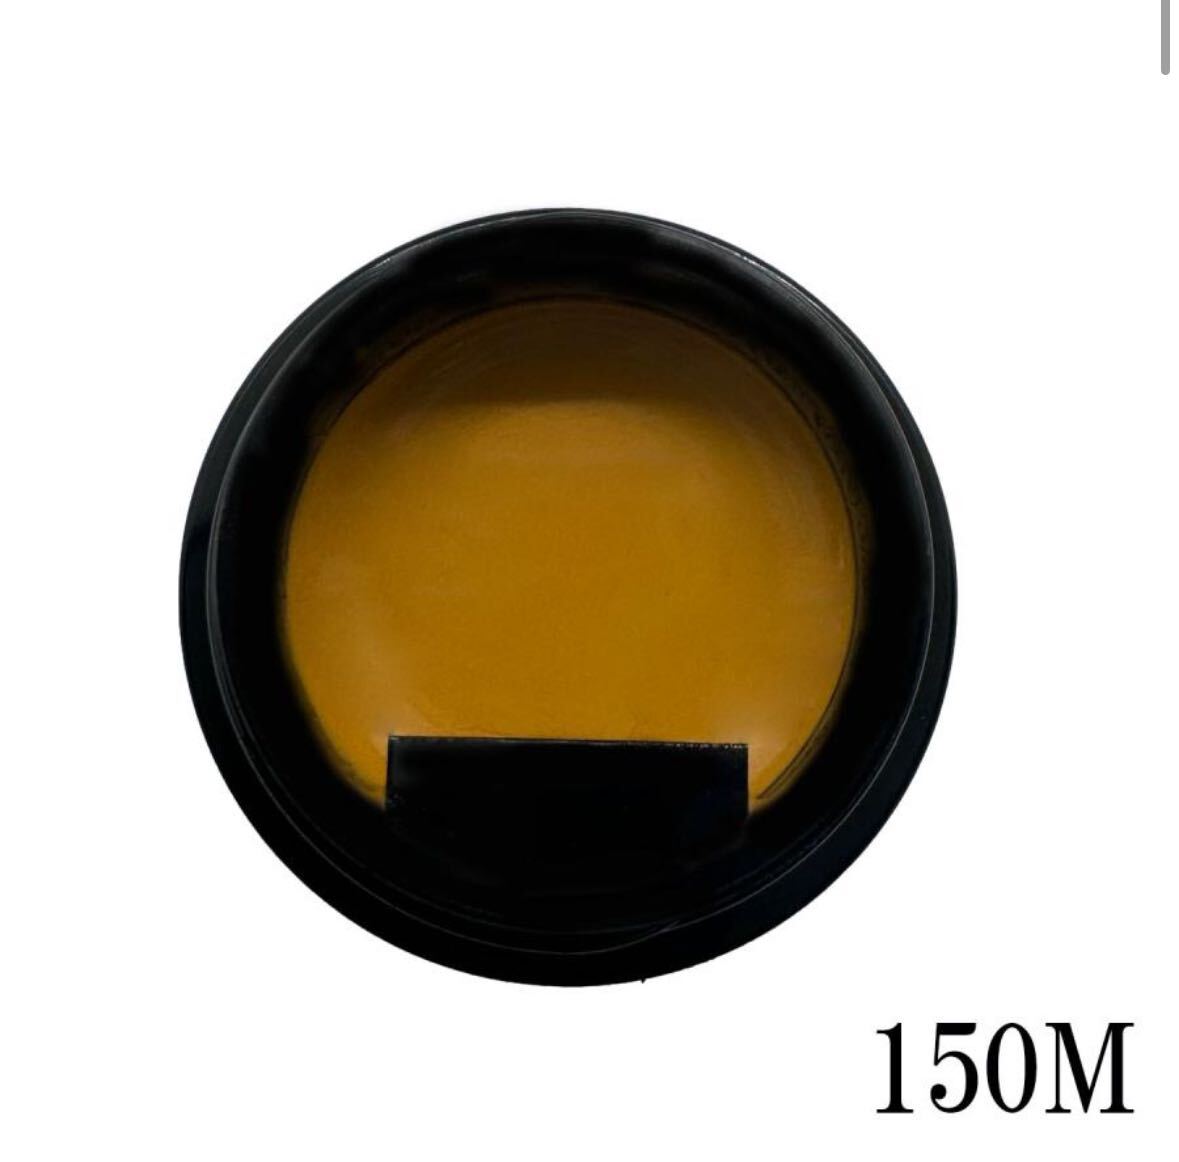 LinoGel リノジェル カラージェル 5g LED/UVライト対応 150M ハニーバター honey butter プロフェショナル ジェルネイル カラー ネイル